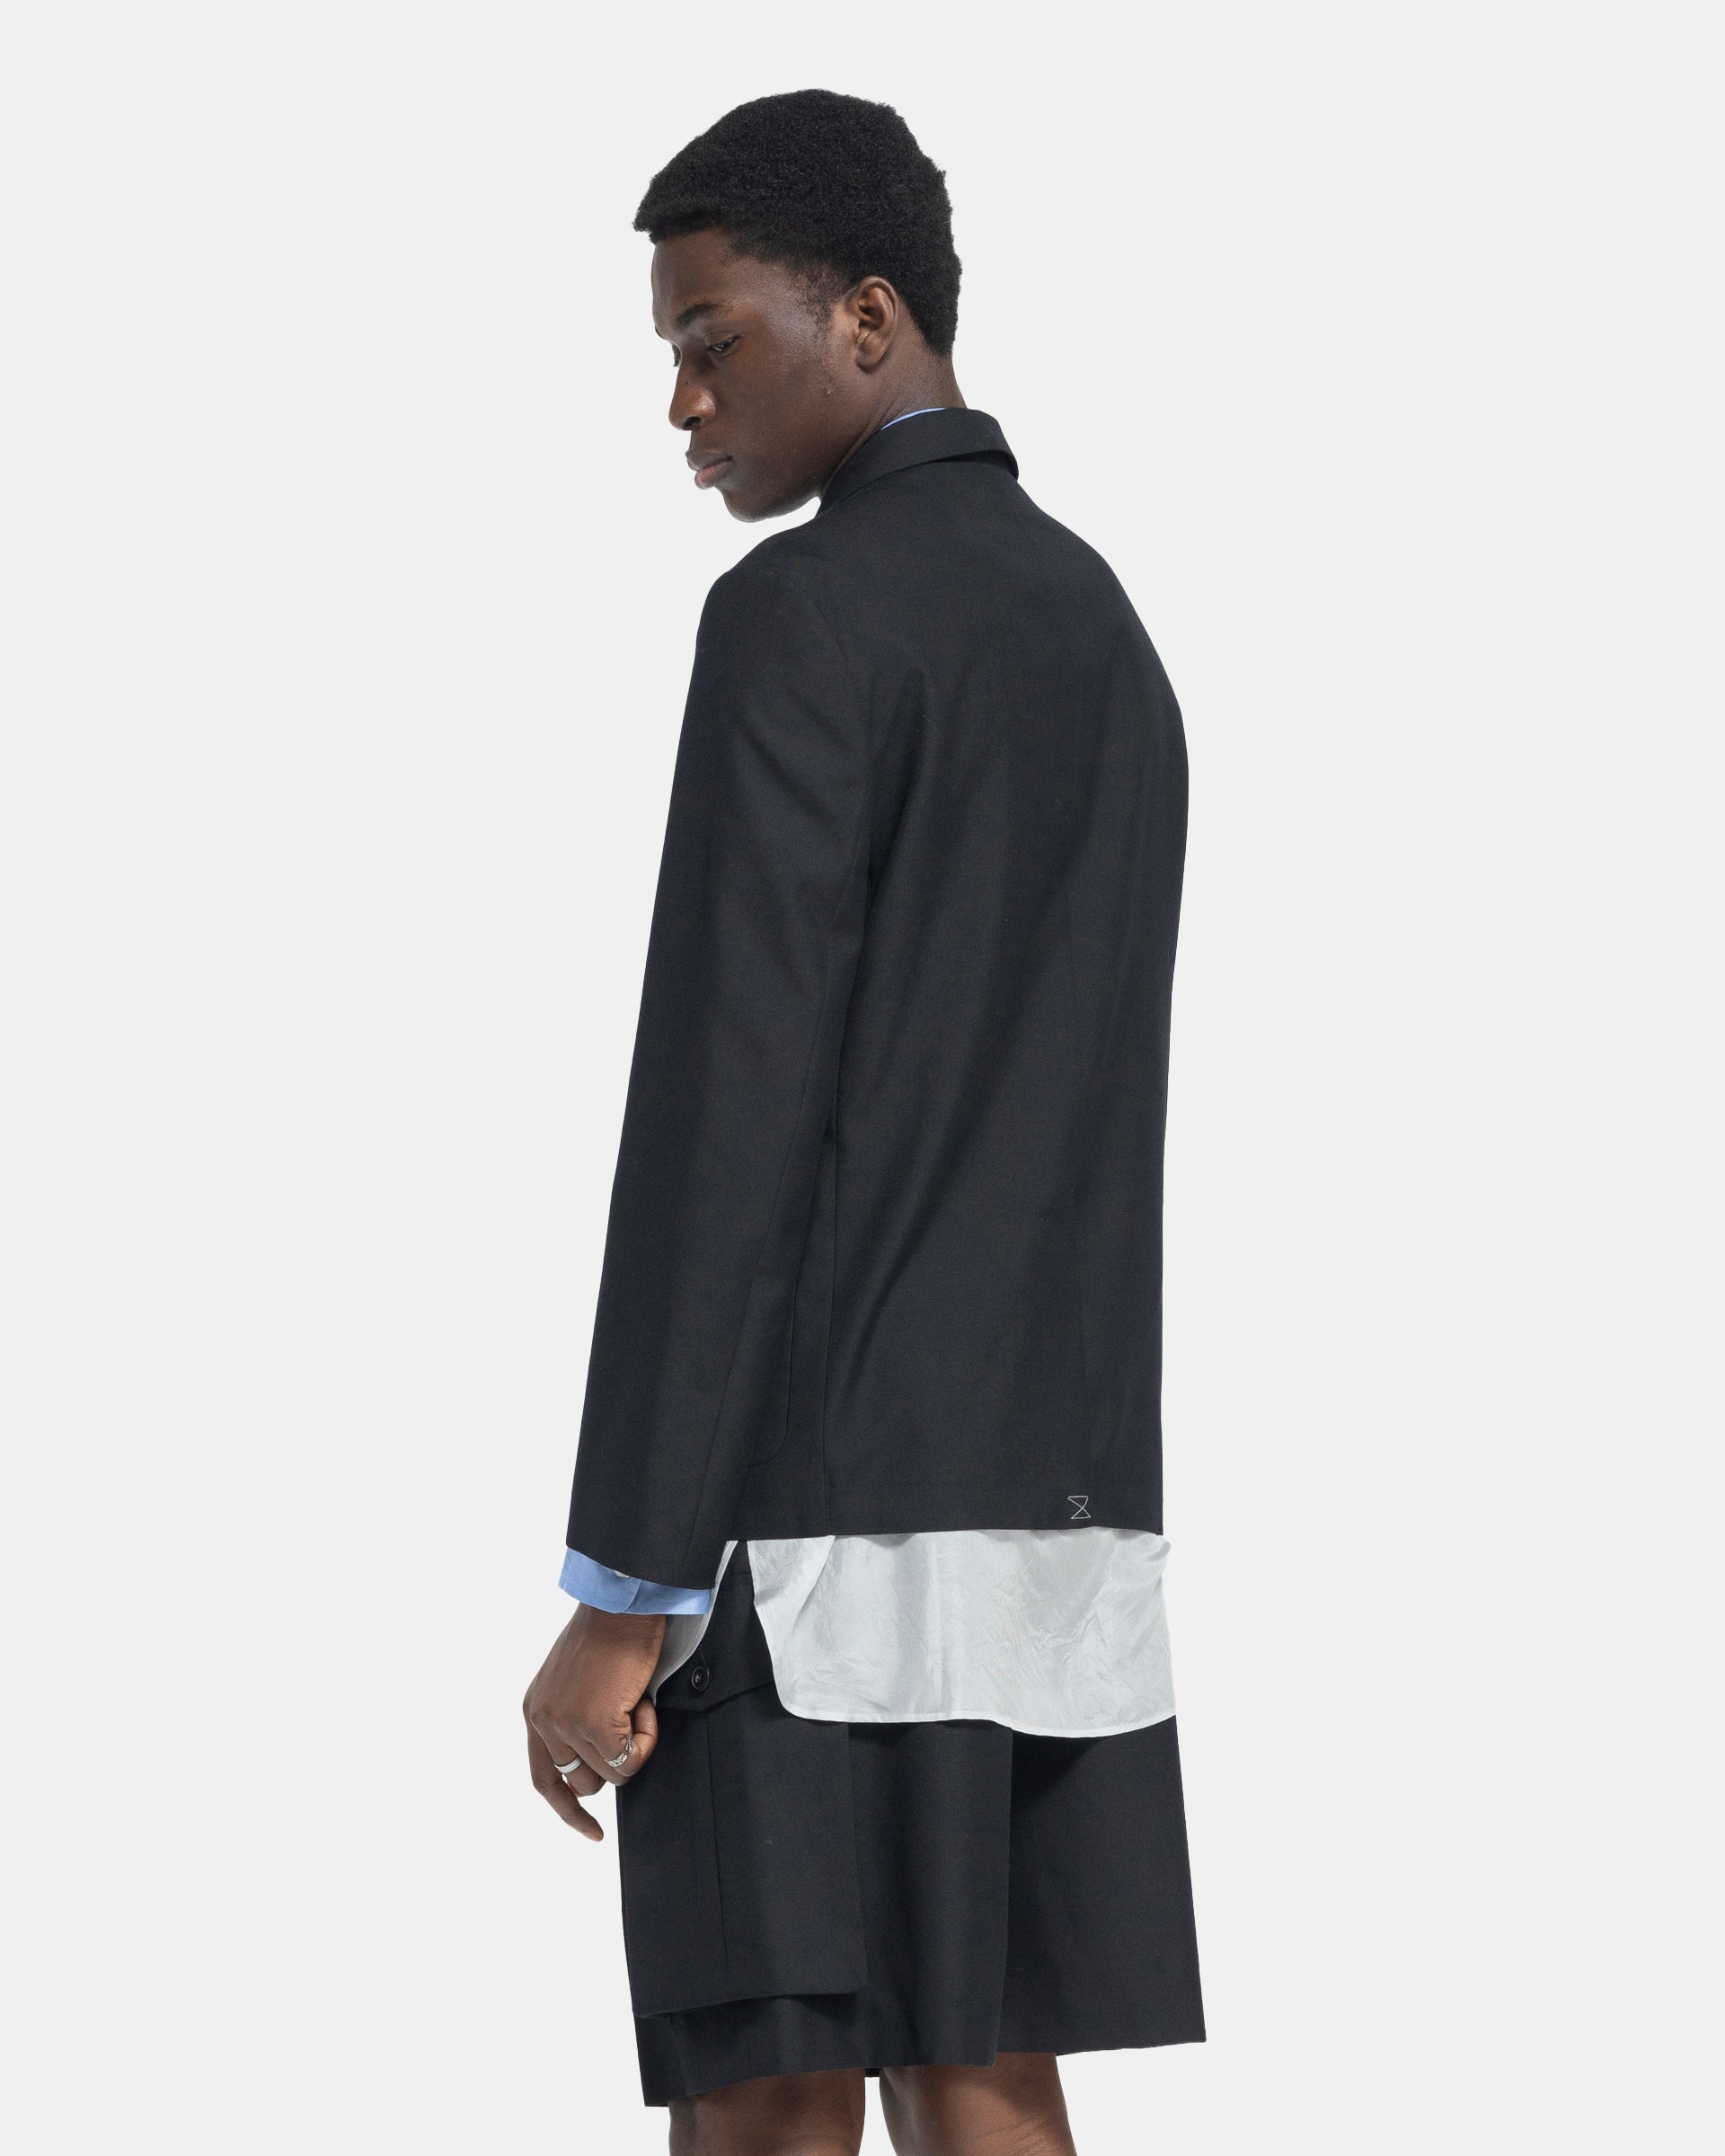 Model wearing Dries Van Noten Barleys Jacket in Black on white background